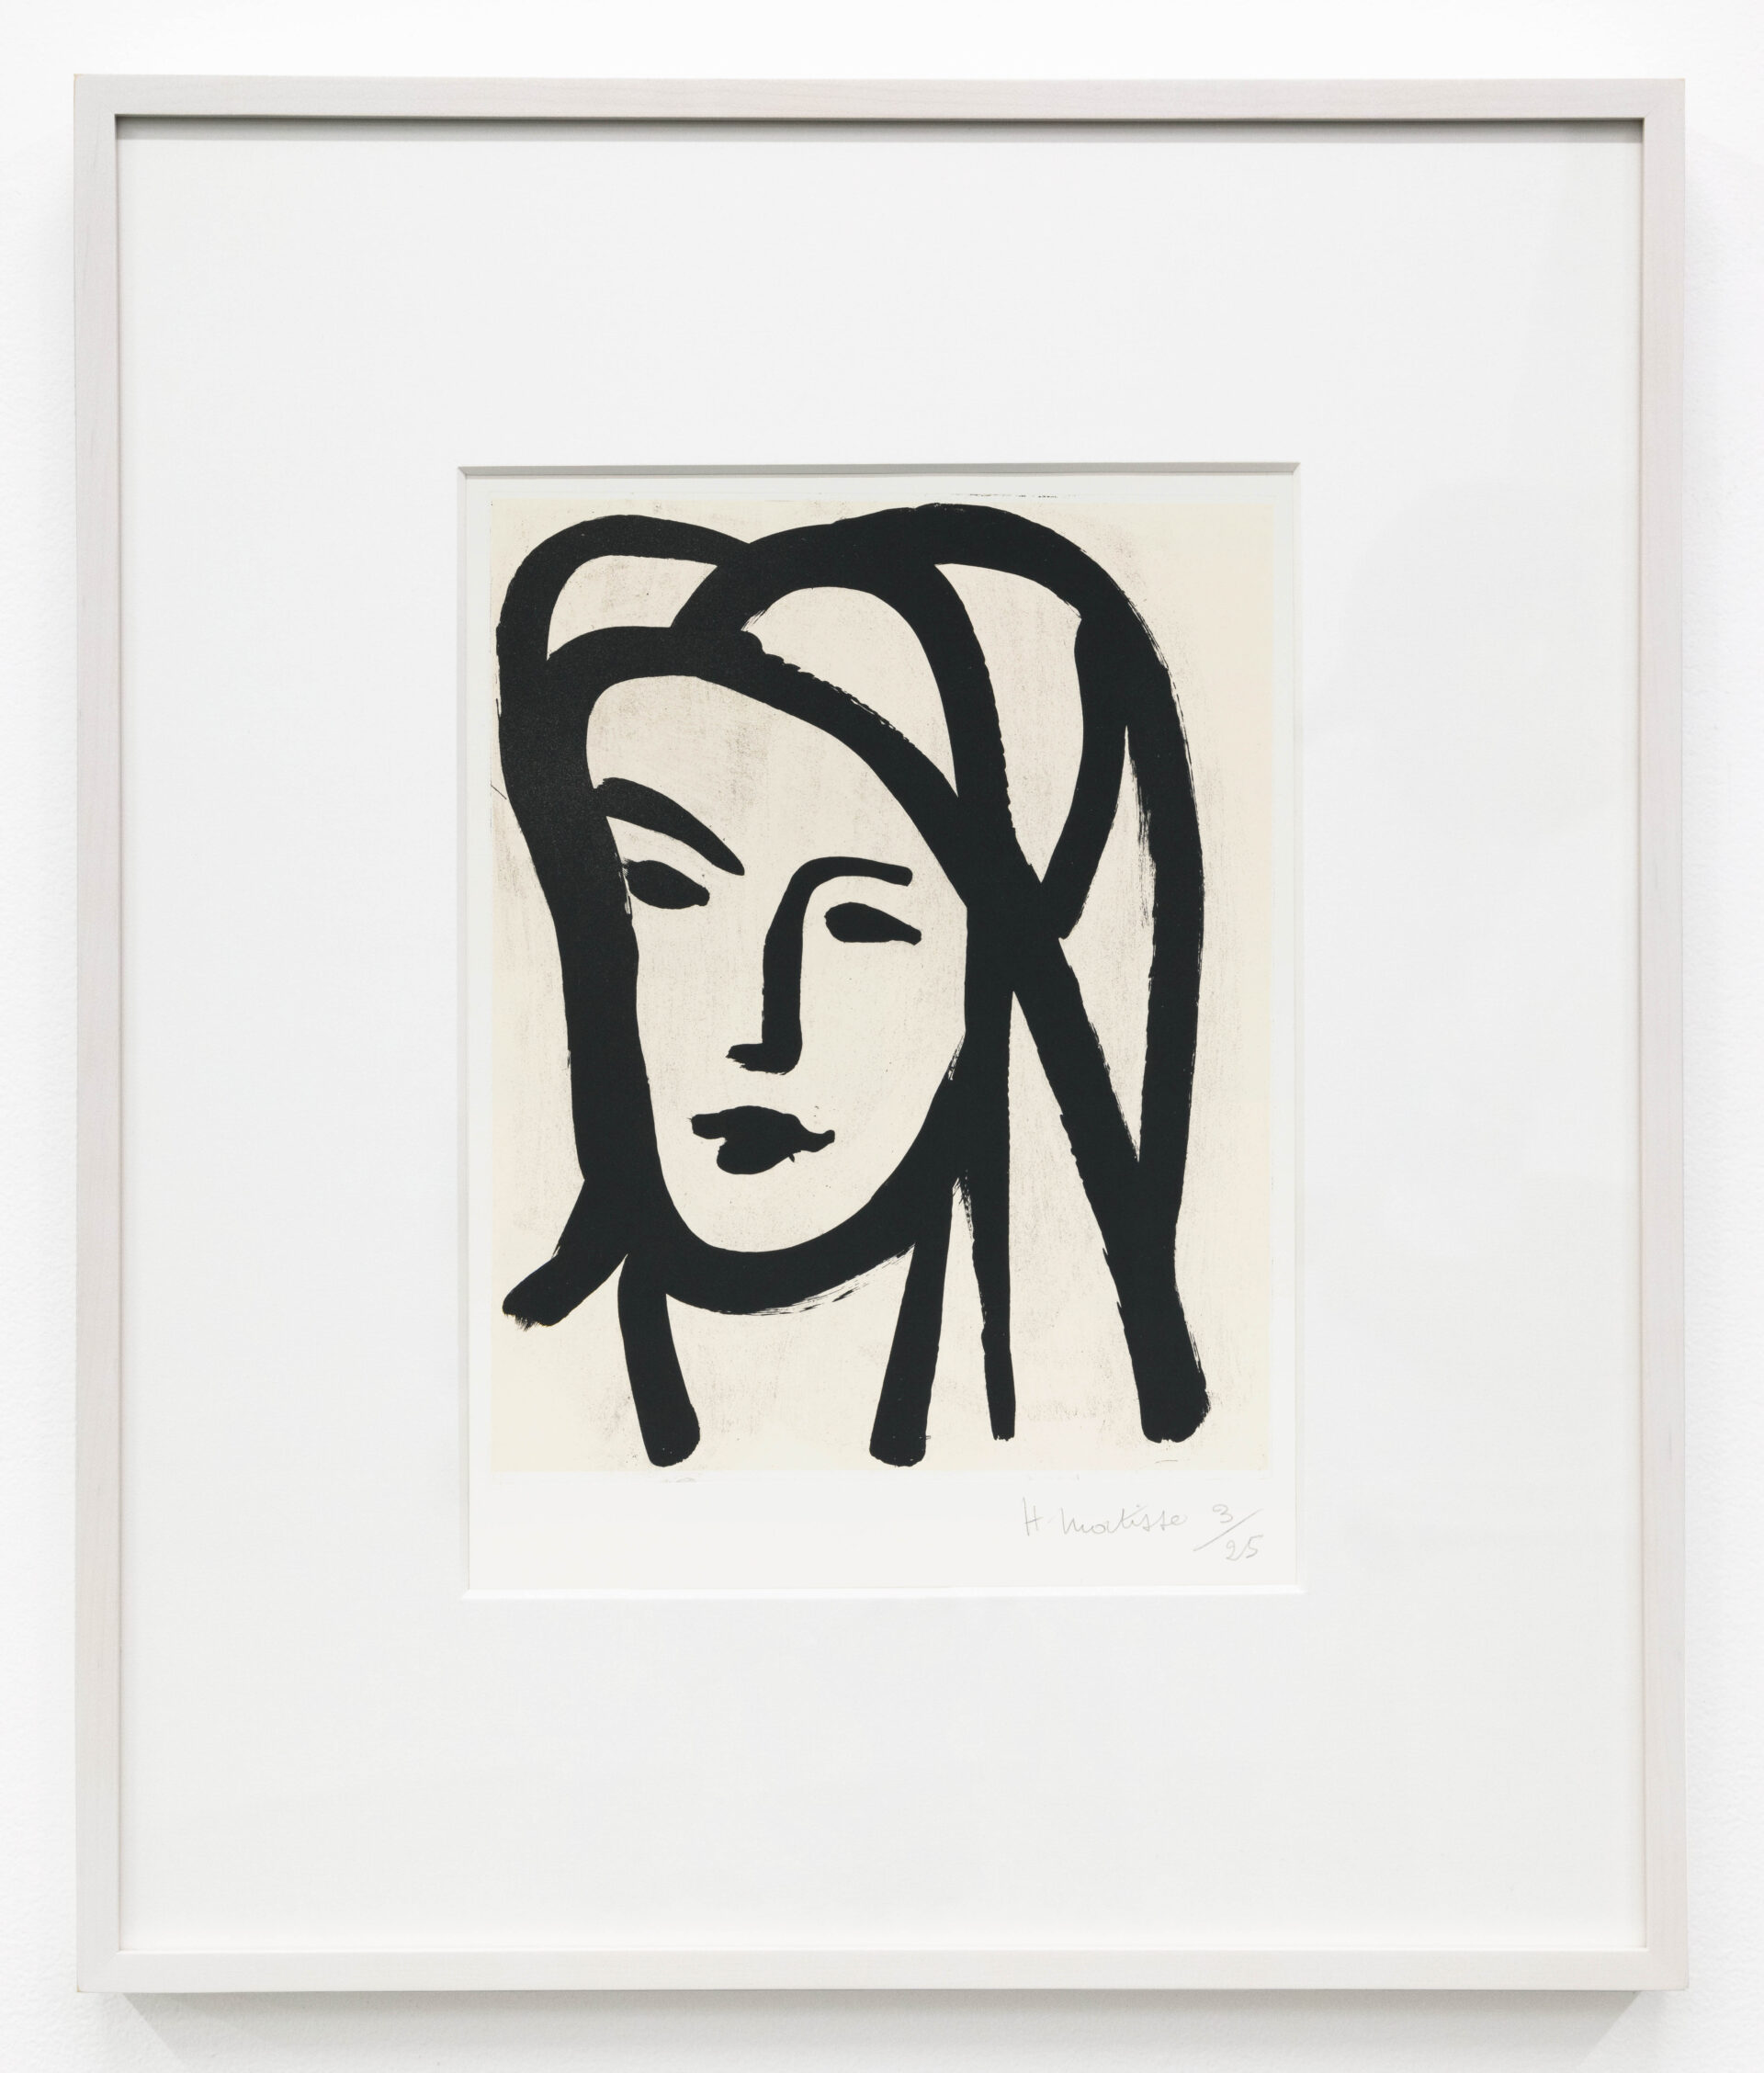 Henri Matisse Bédouine au grand voile, 1945 Aquatint Image Dimensions: 12 1/2 x 9 7/8 inches (31.8 x 25.1 cm) Paper Dimensions: 19 7/8 x 15 inches (50.5 x 38.1 cm) Framed Dimensions: 26 x 22 5/8 inches (66 x 57.5 cm) Edition of 25